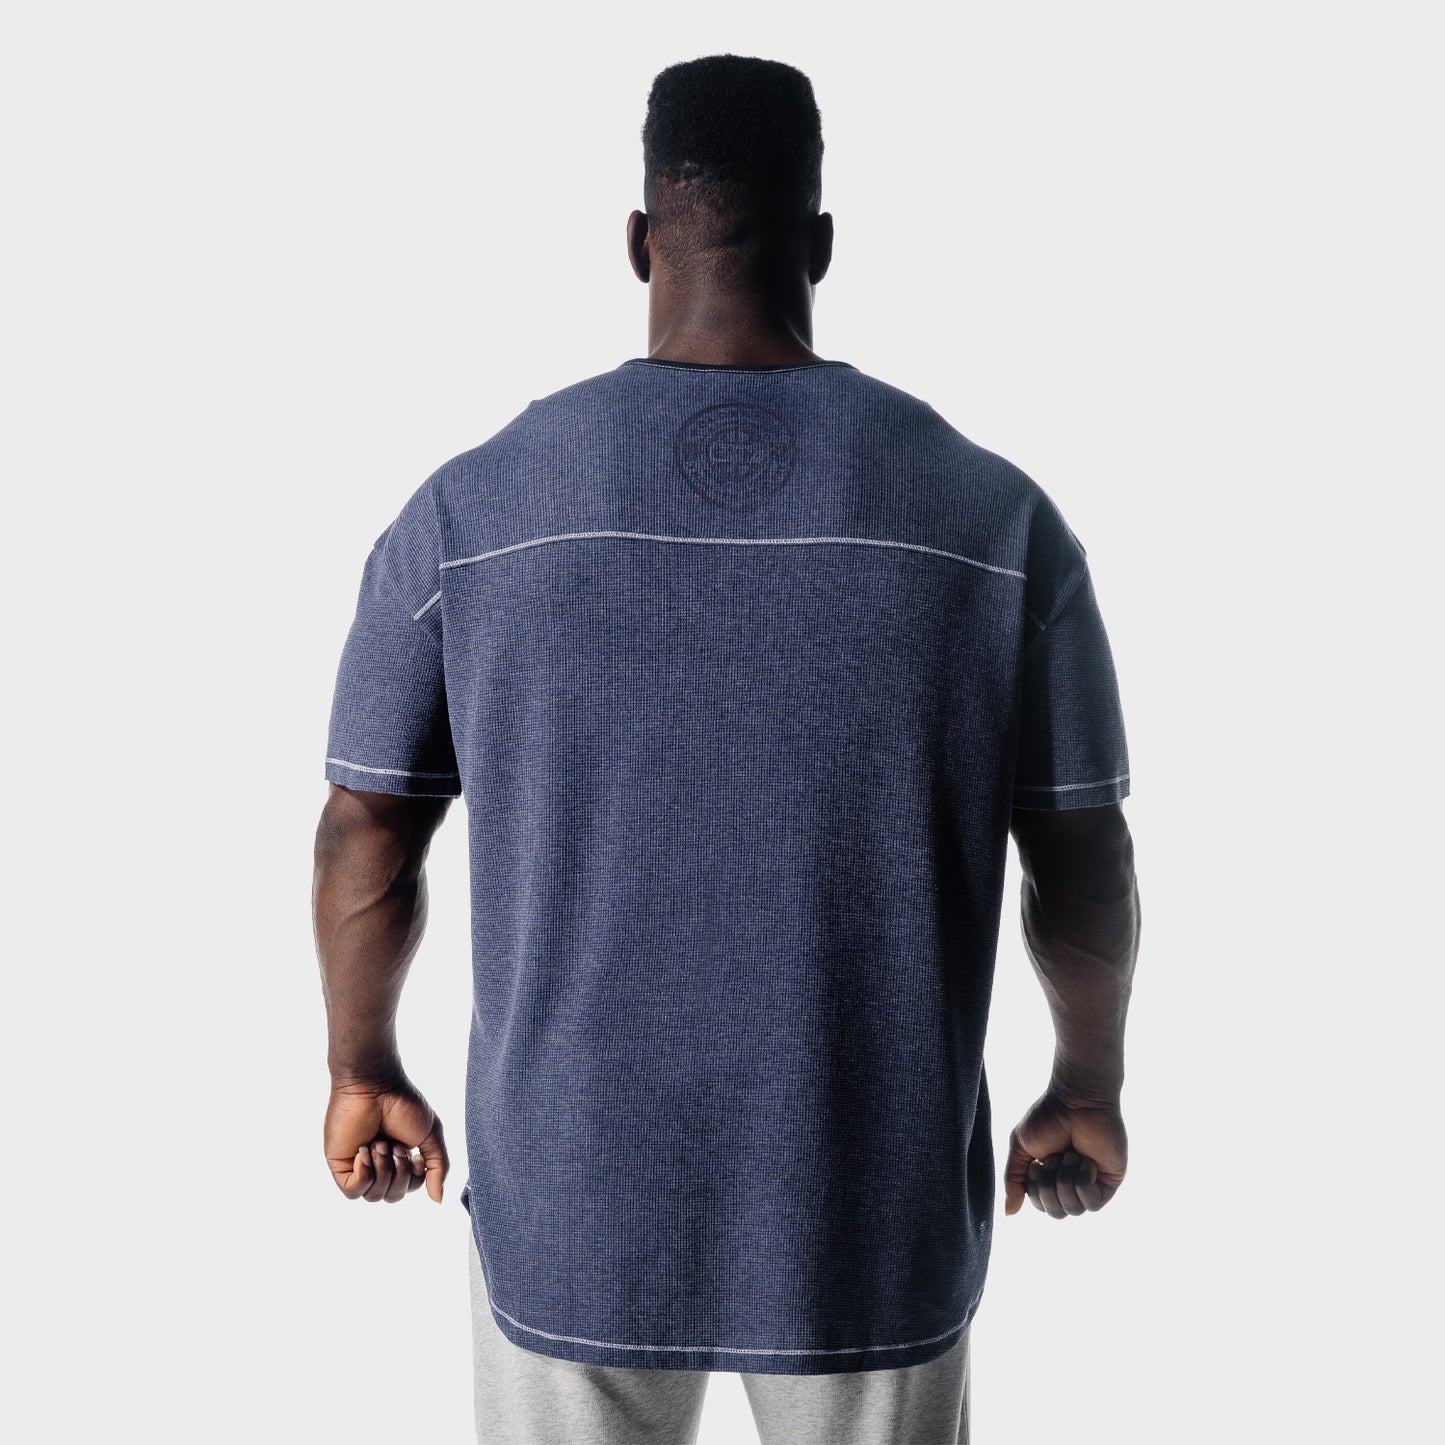 squatwolf-workout-shirts-golden-era-waffle-top-patriot-blue-gym-wear-for-men